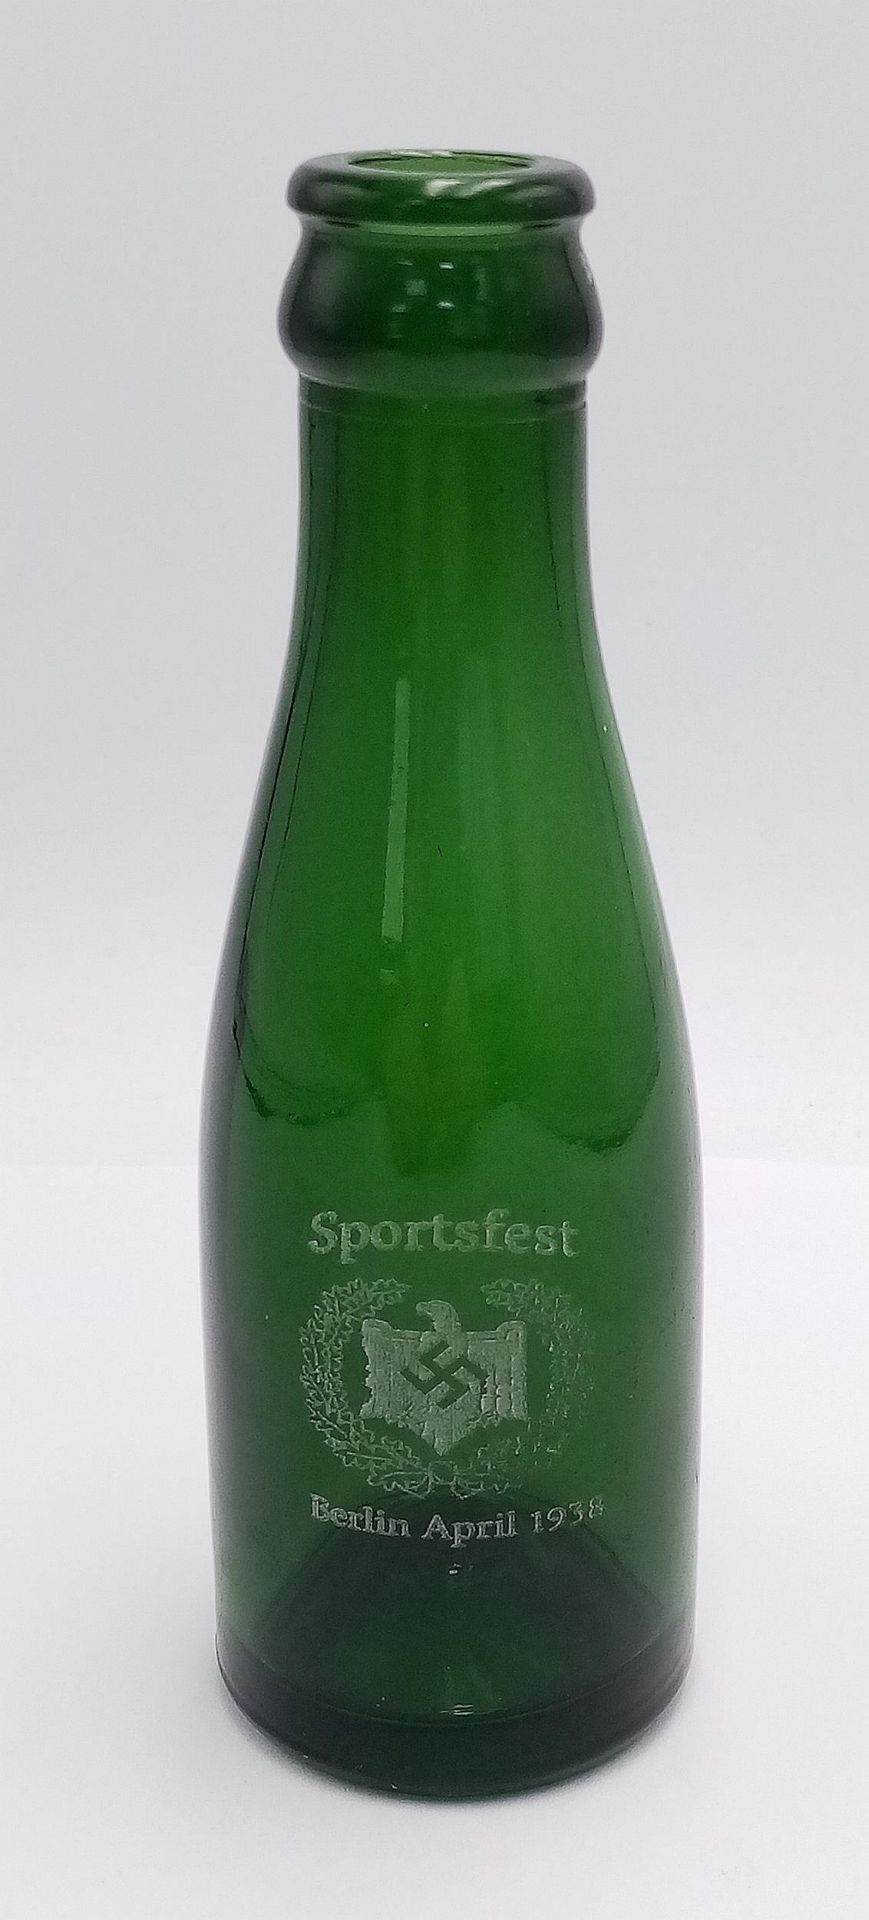 3rd Reich 100ml Bottle from the Hitler Youth Sportsfest, Berlin 1938.